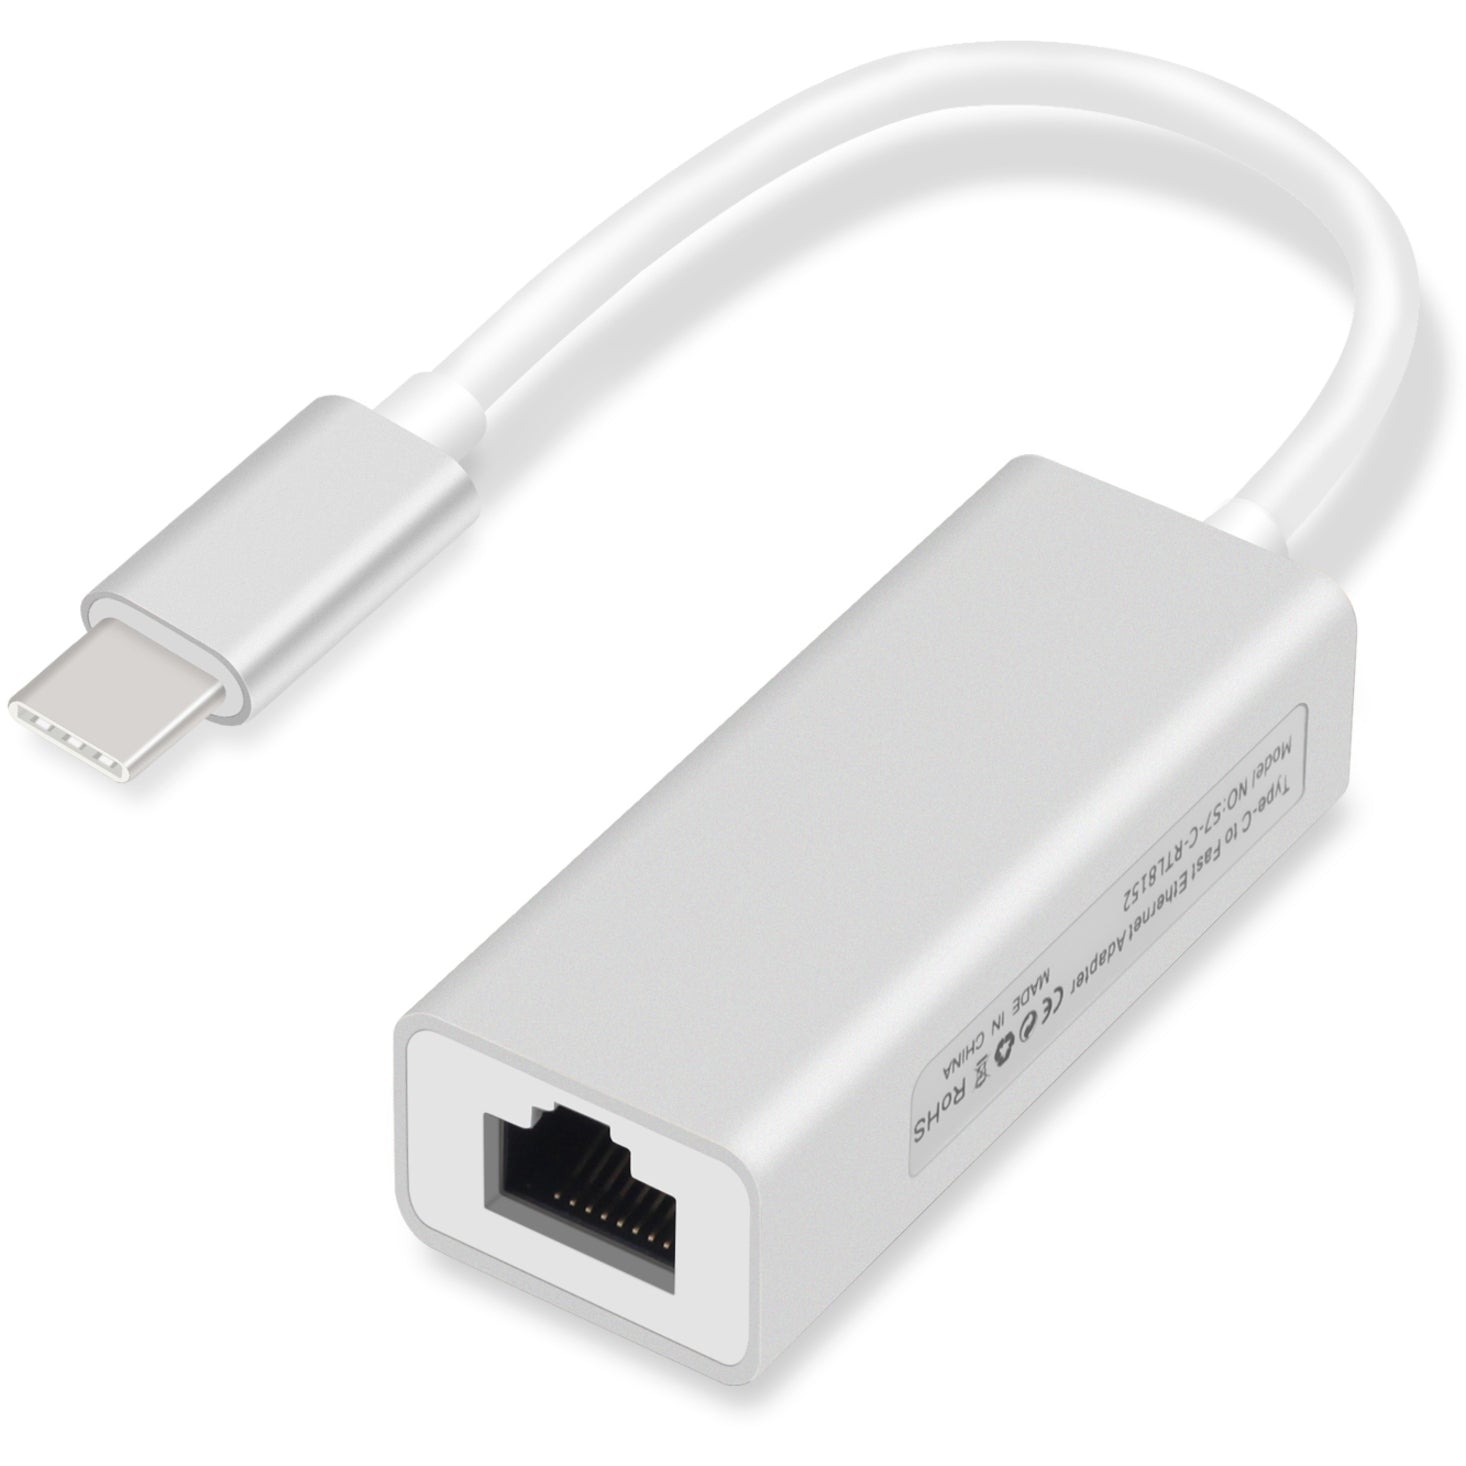 4XEM 4XUSBCETHERNET USB-C to Ethernet Adapter, Portable 1000Base-T Ethernet Card